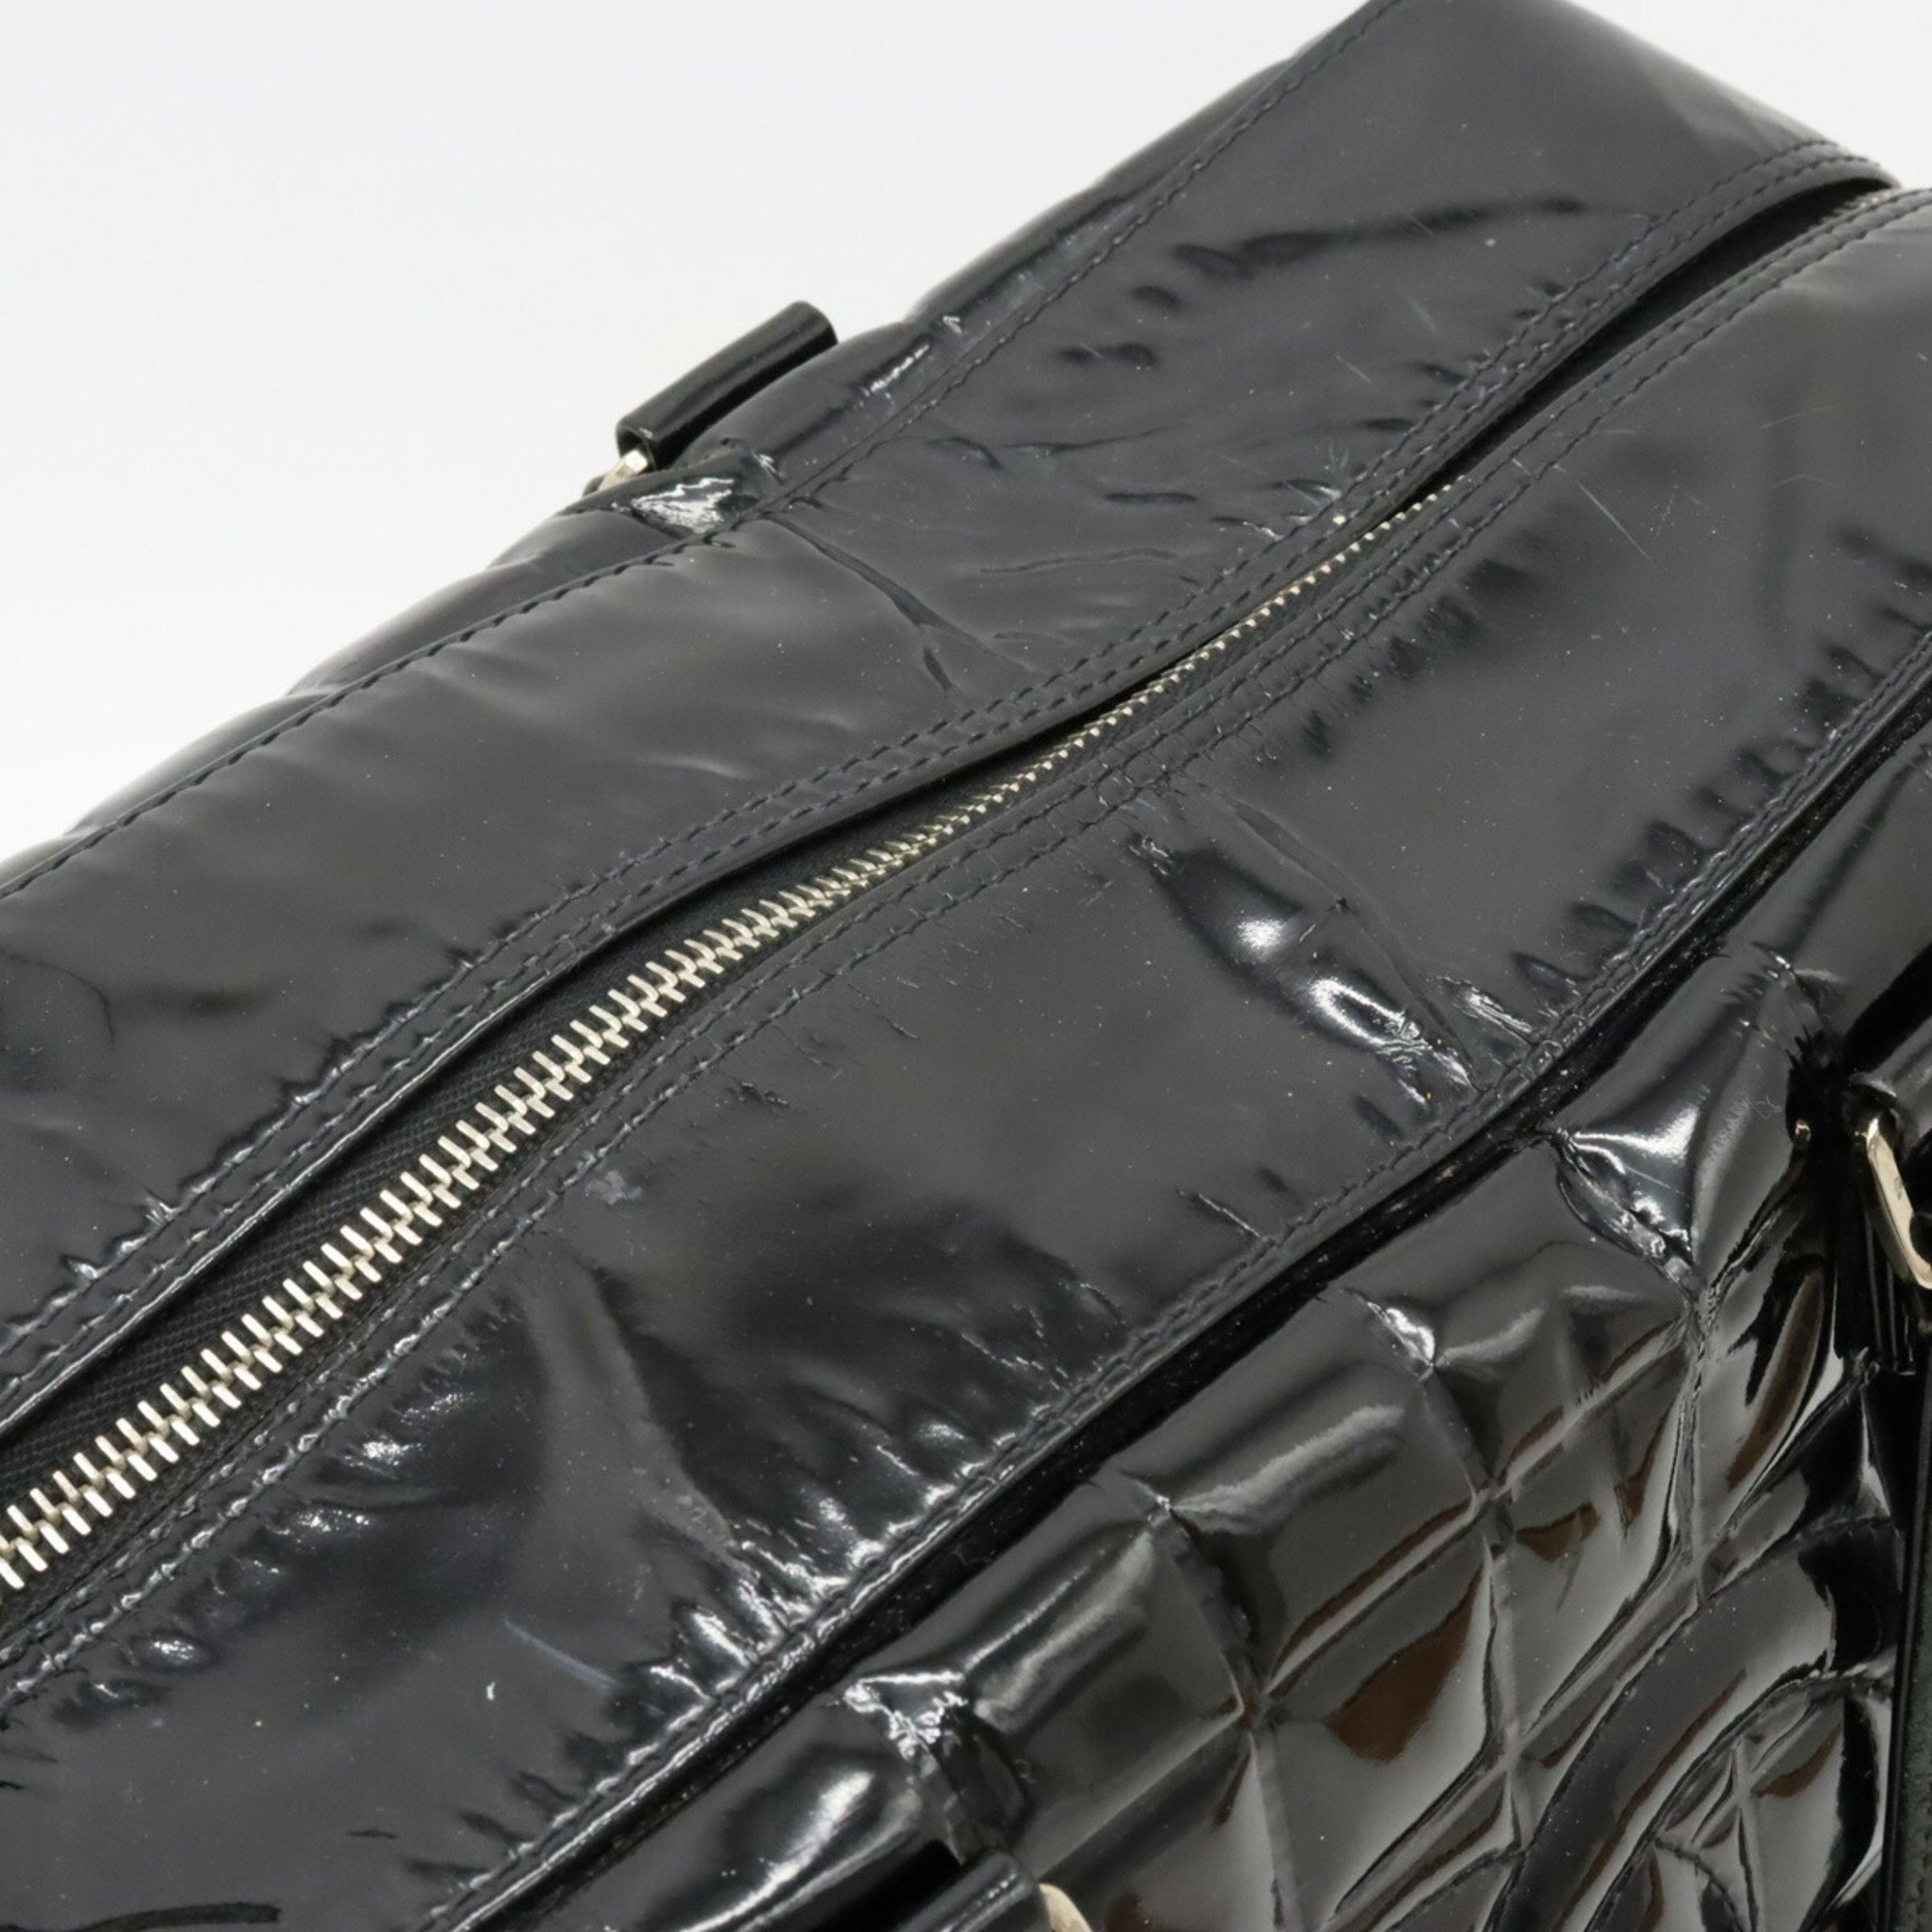 CHANEL Chocolate Bar Coco Mark Handbag Boston Bag Patent Leather Black A19271